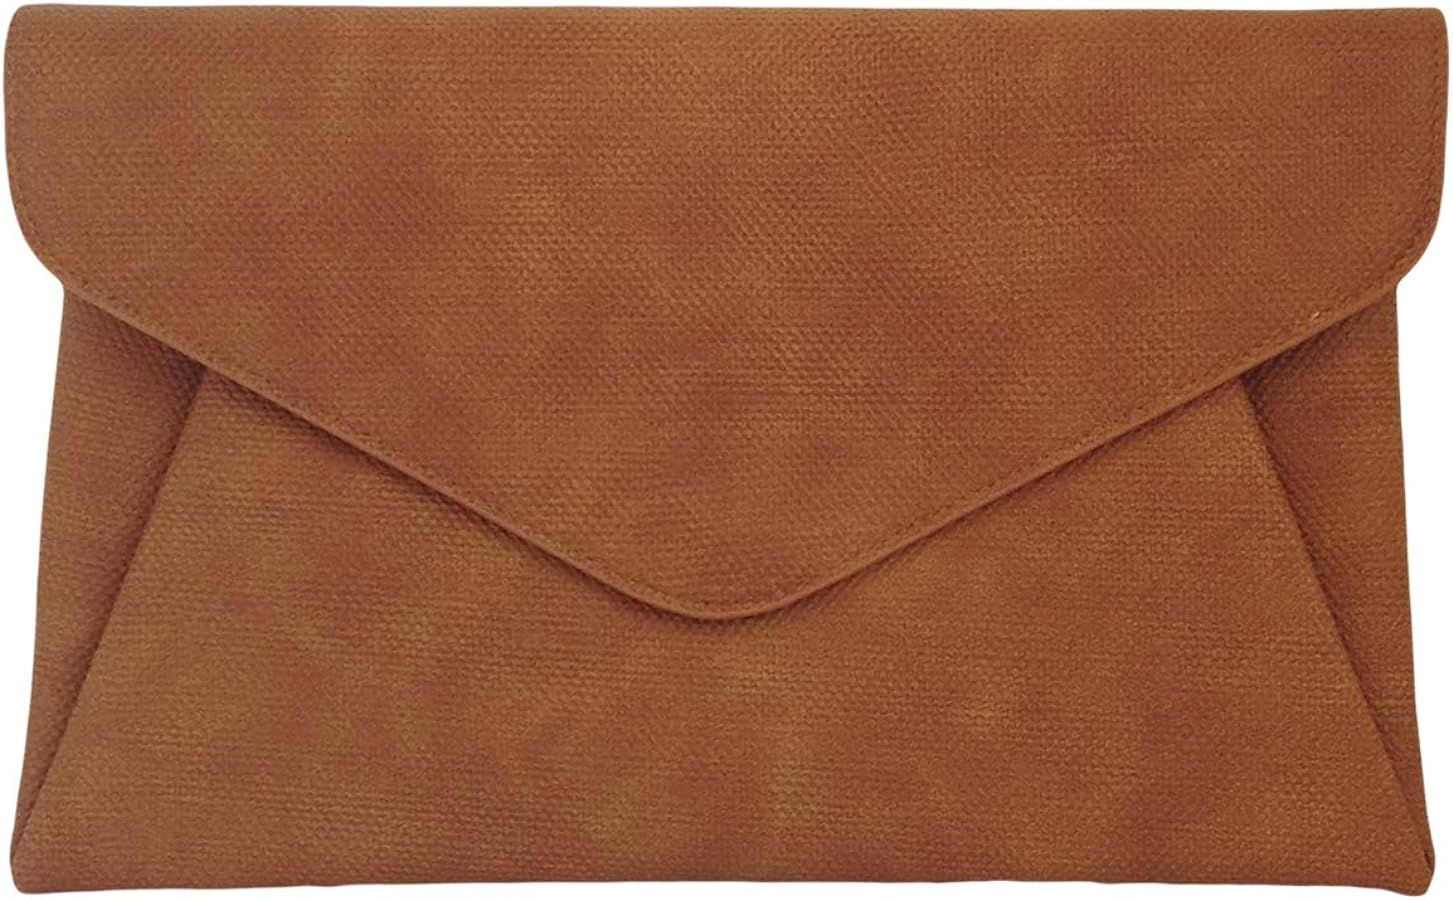 JNB Synthetic Leather Double Pocket Envelop Clutch | Amazon (US)